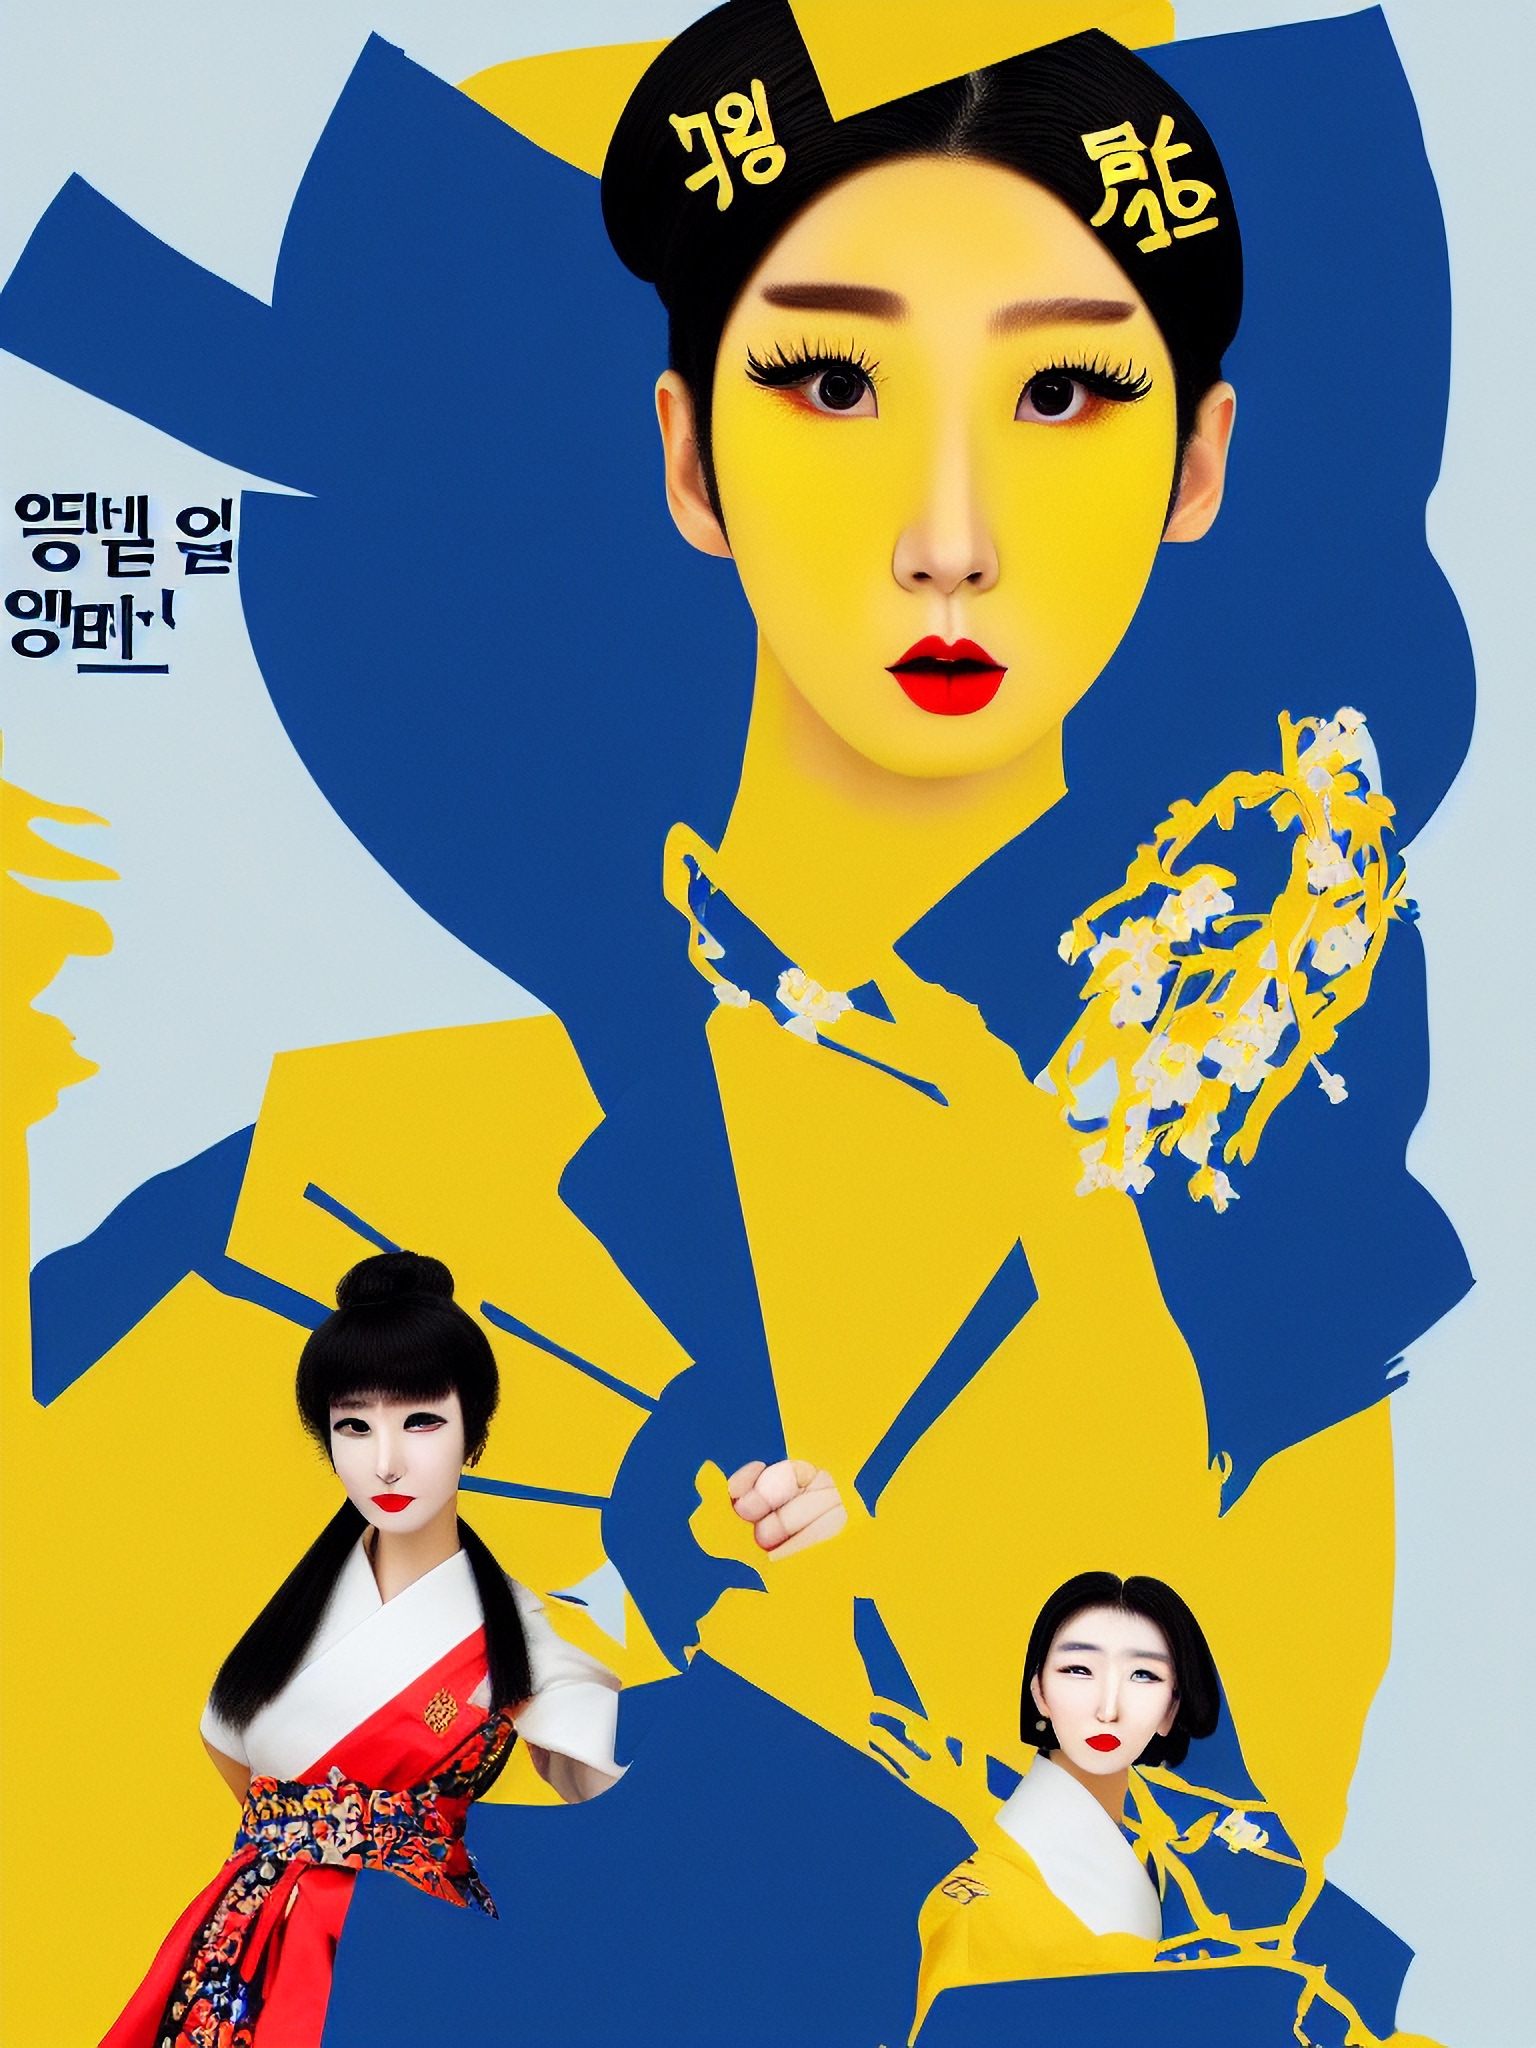 asian-poster-design-yellow-blue-model-fashion-4